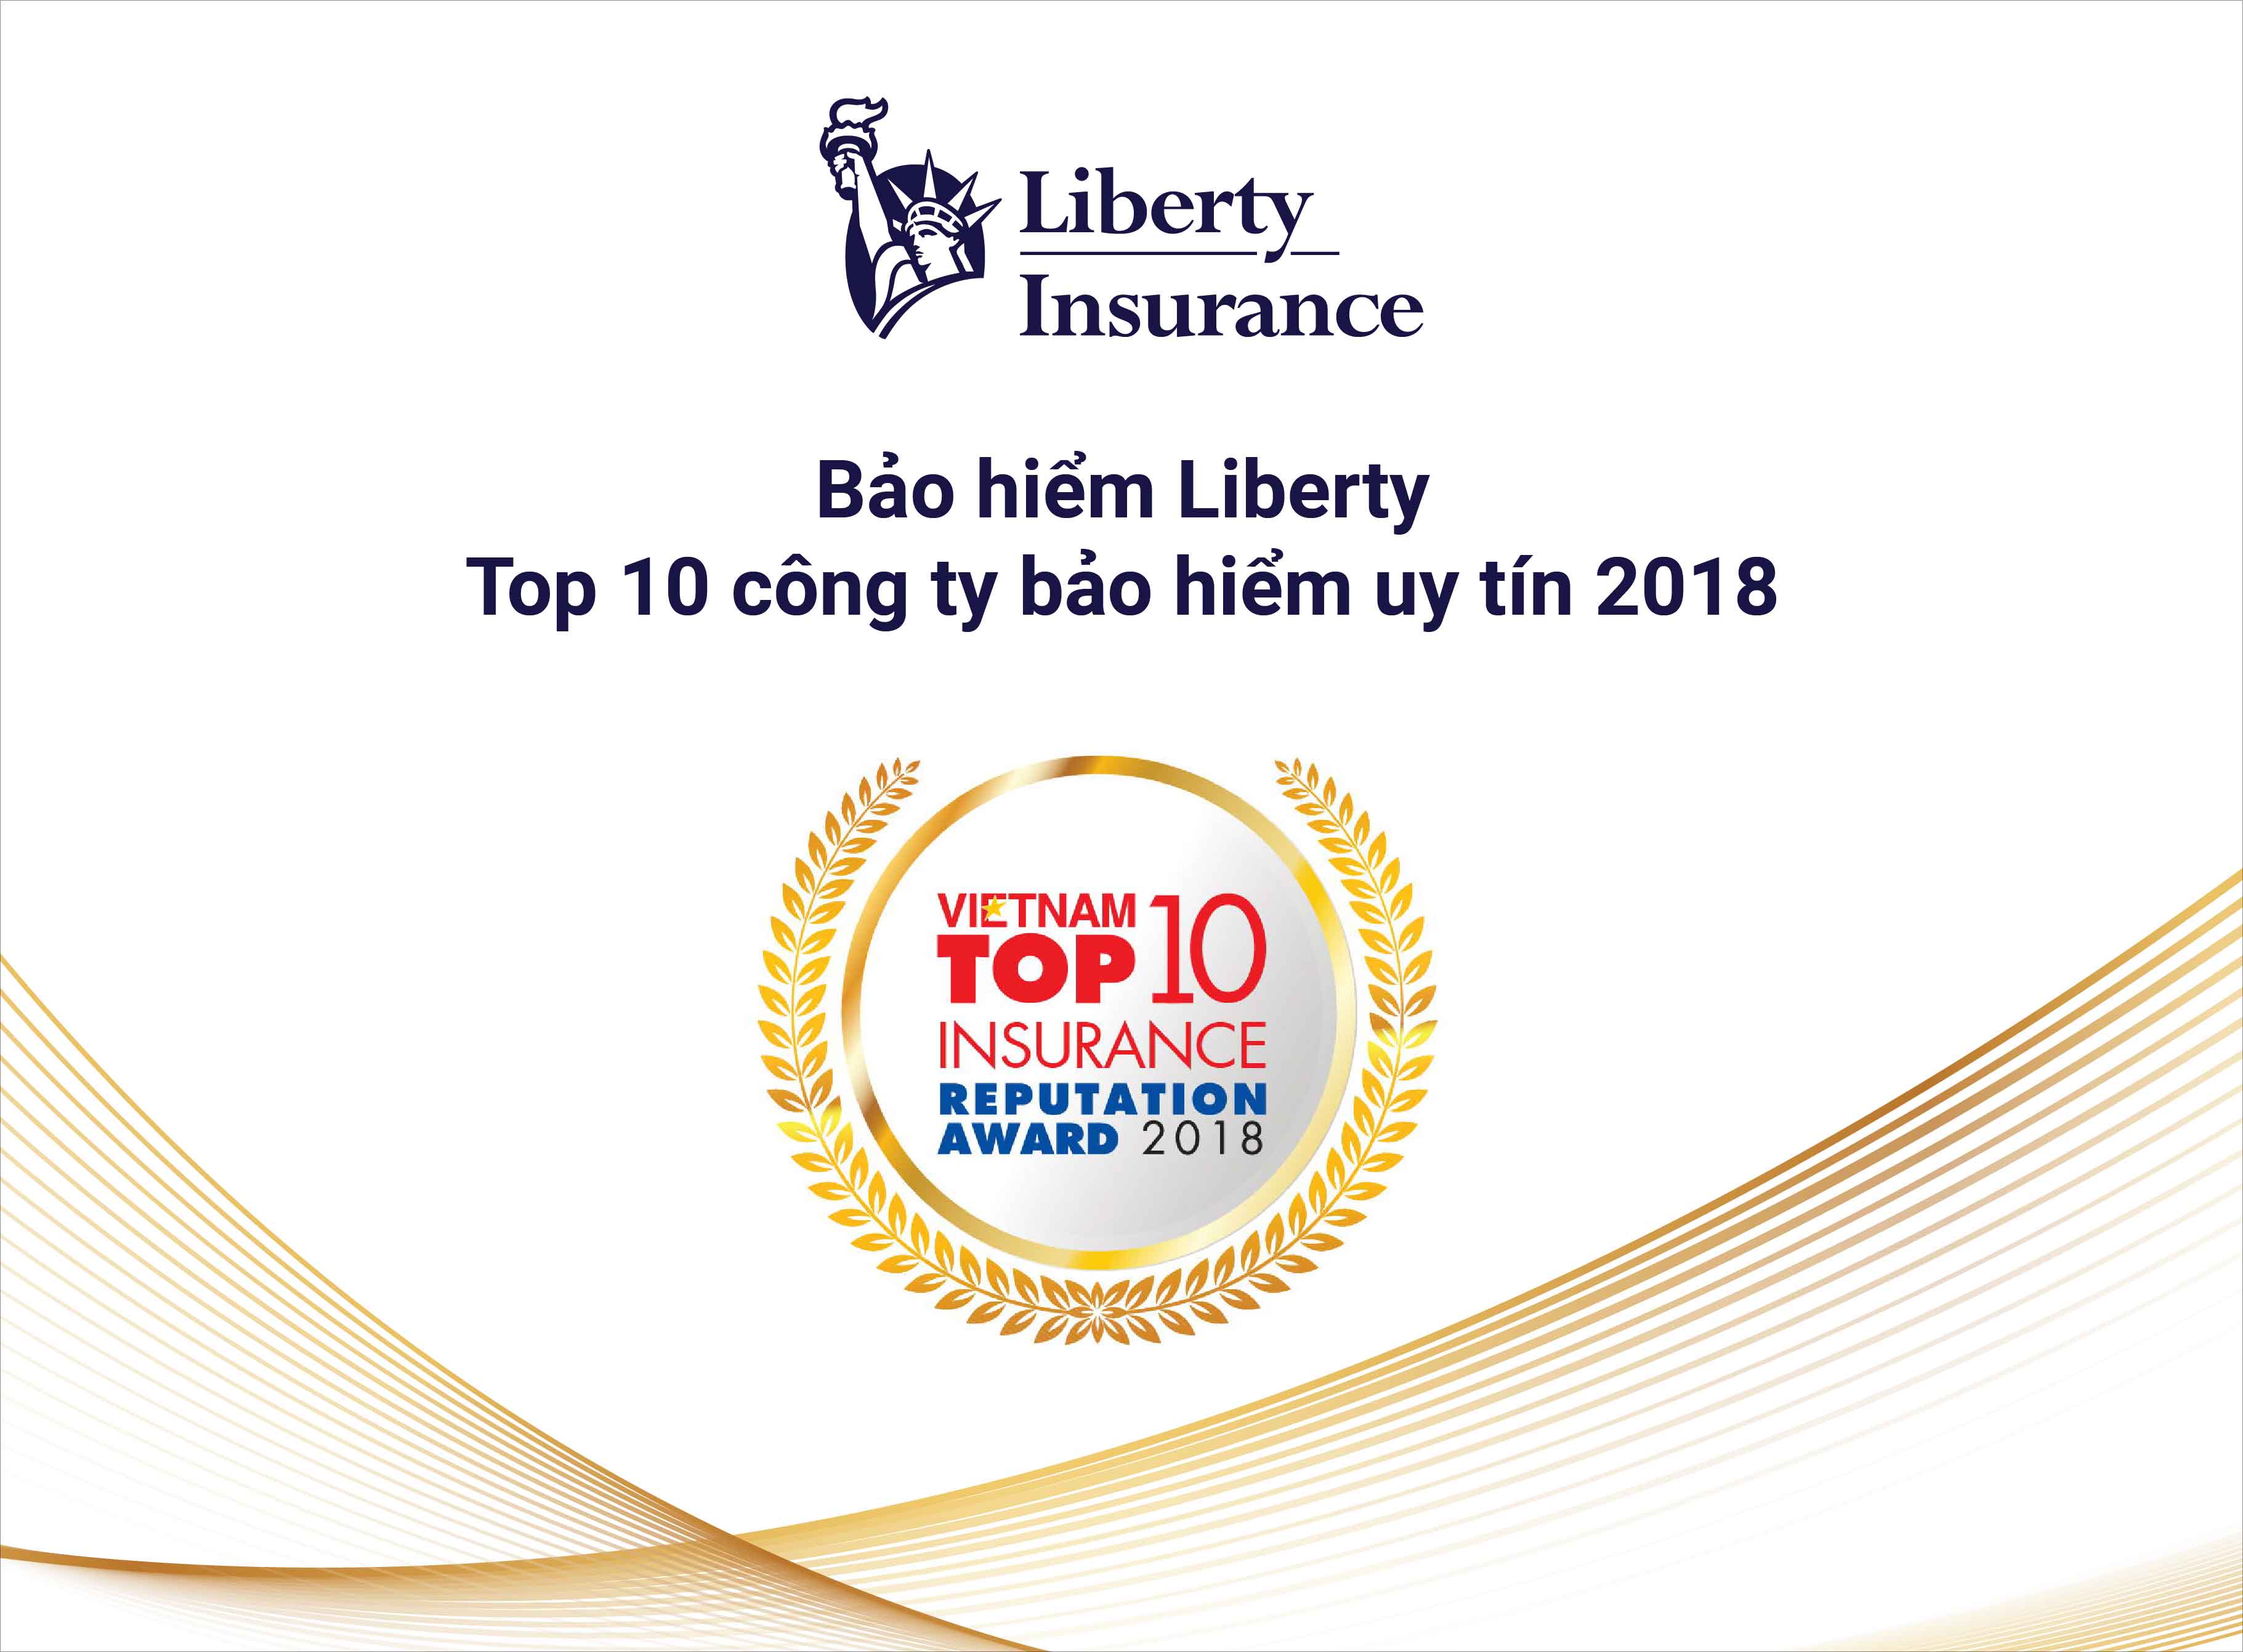 Liberty Insurance top 10 reputable non-life insurance companies Vietnam 2018